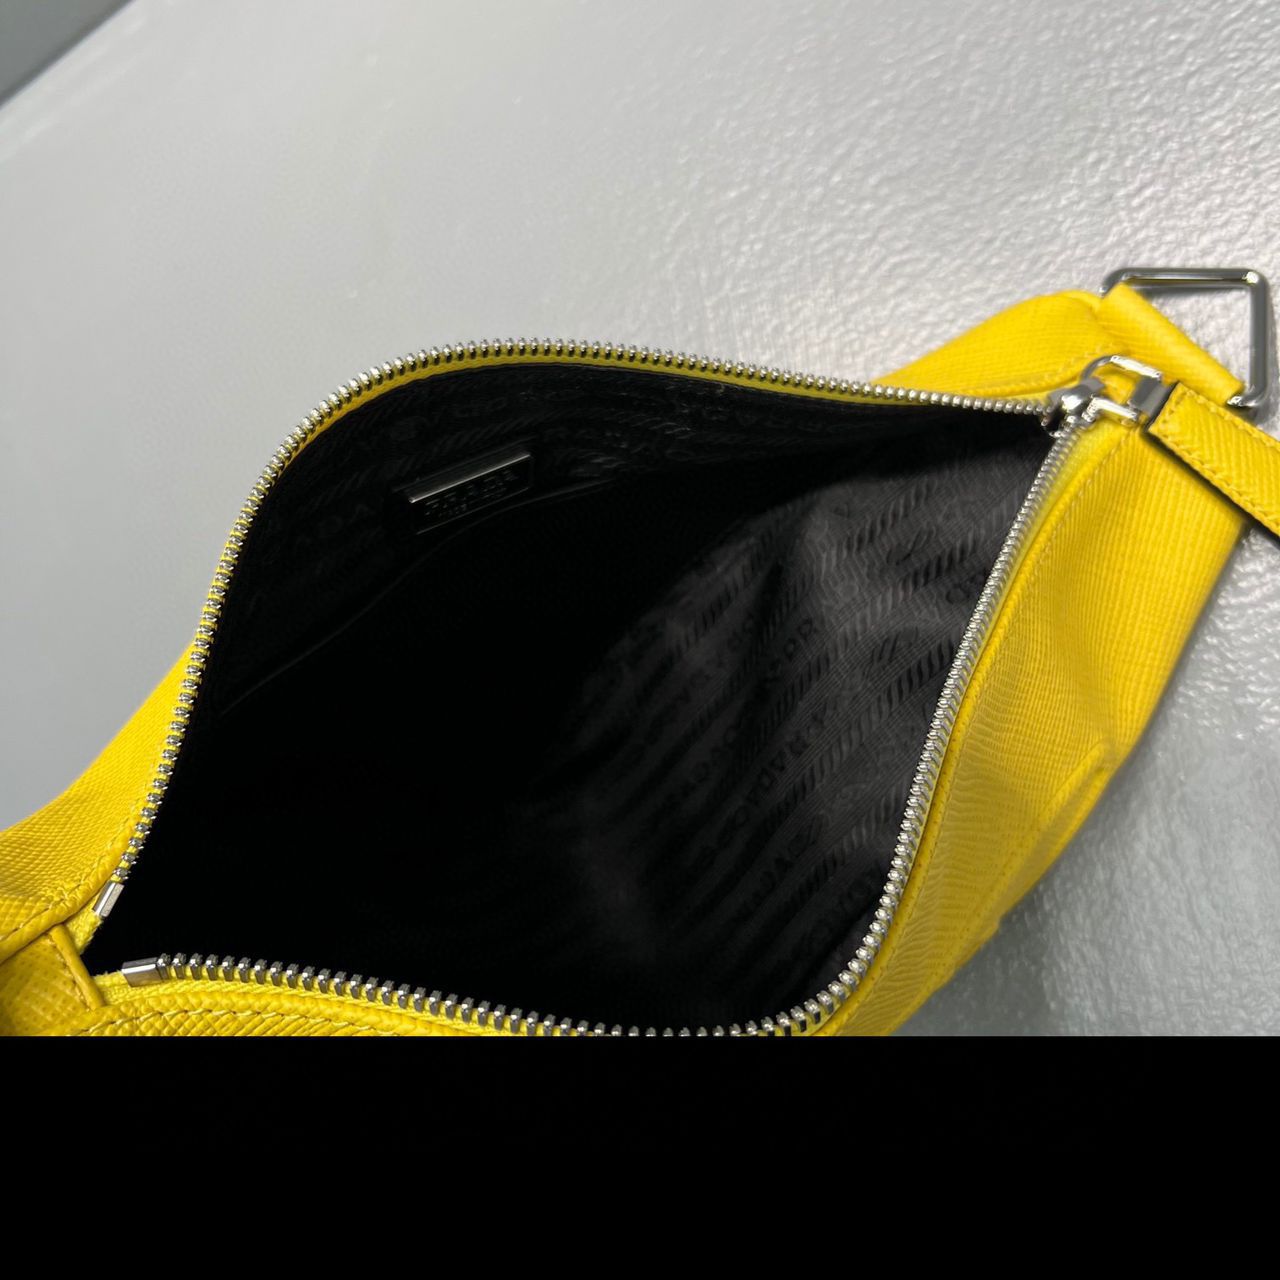 Prada Small Messenger Bag for Sale in New York, New York - OfferUp